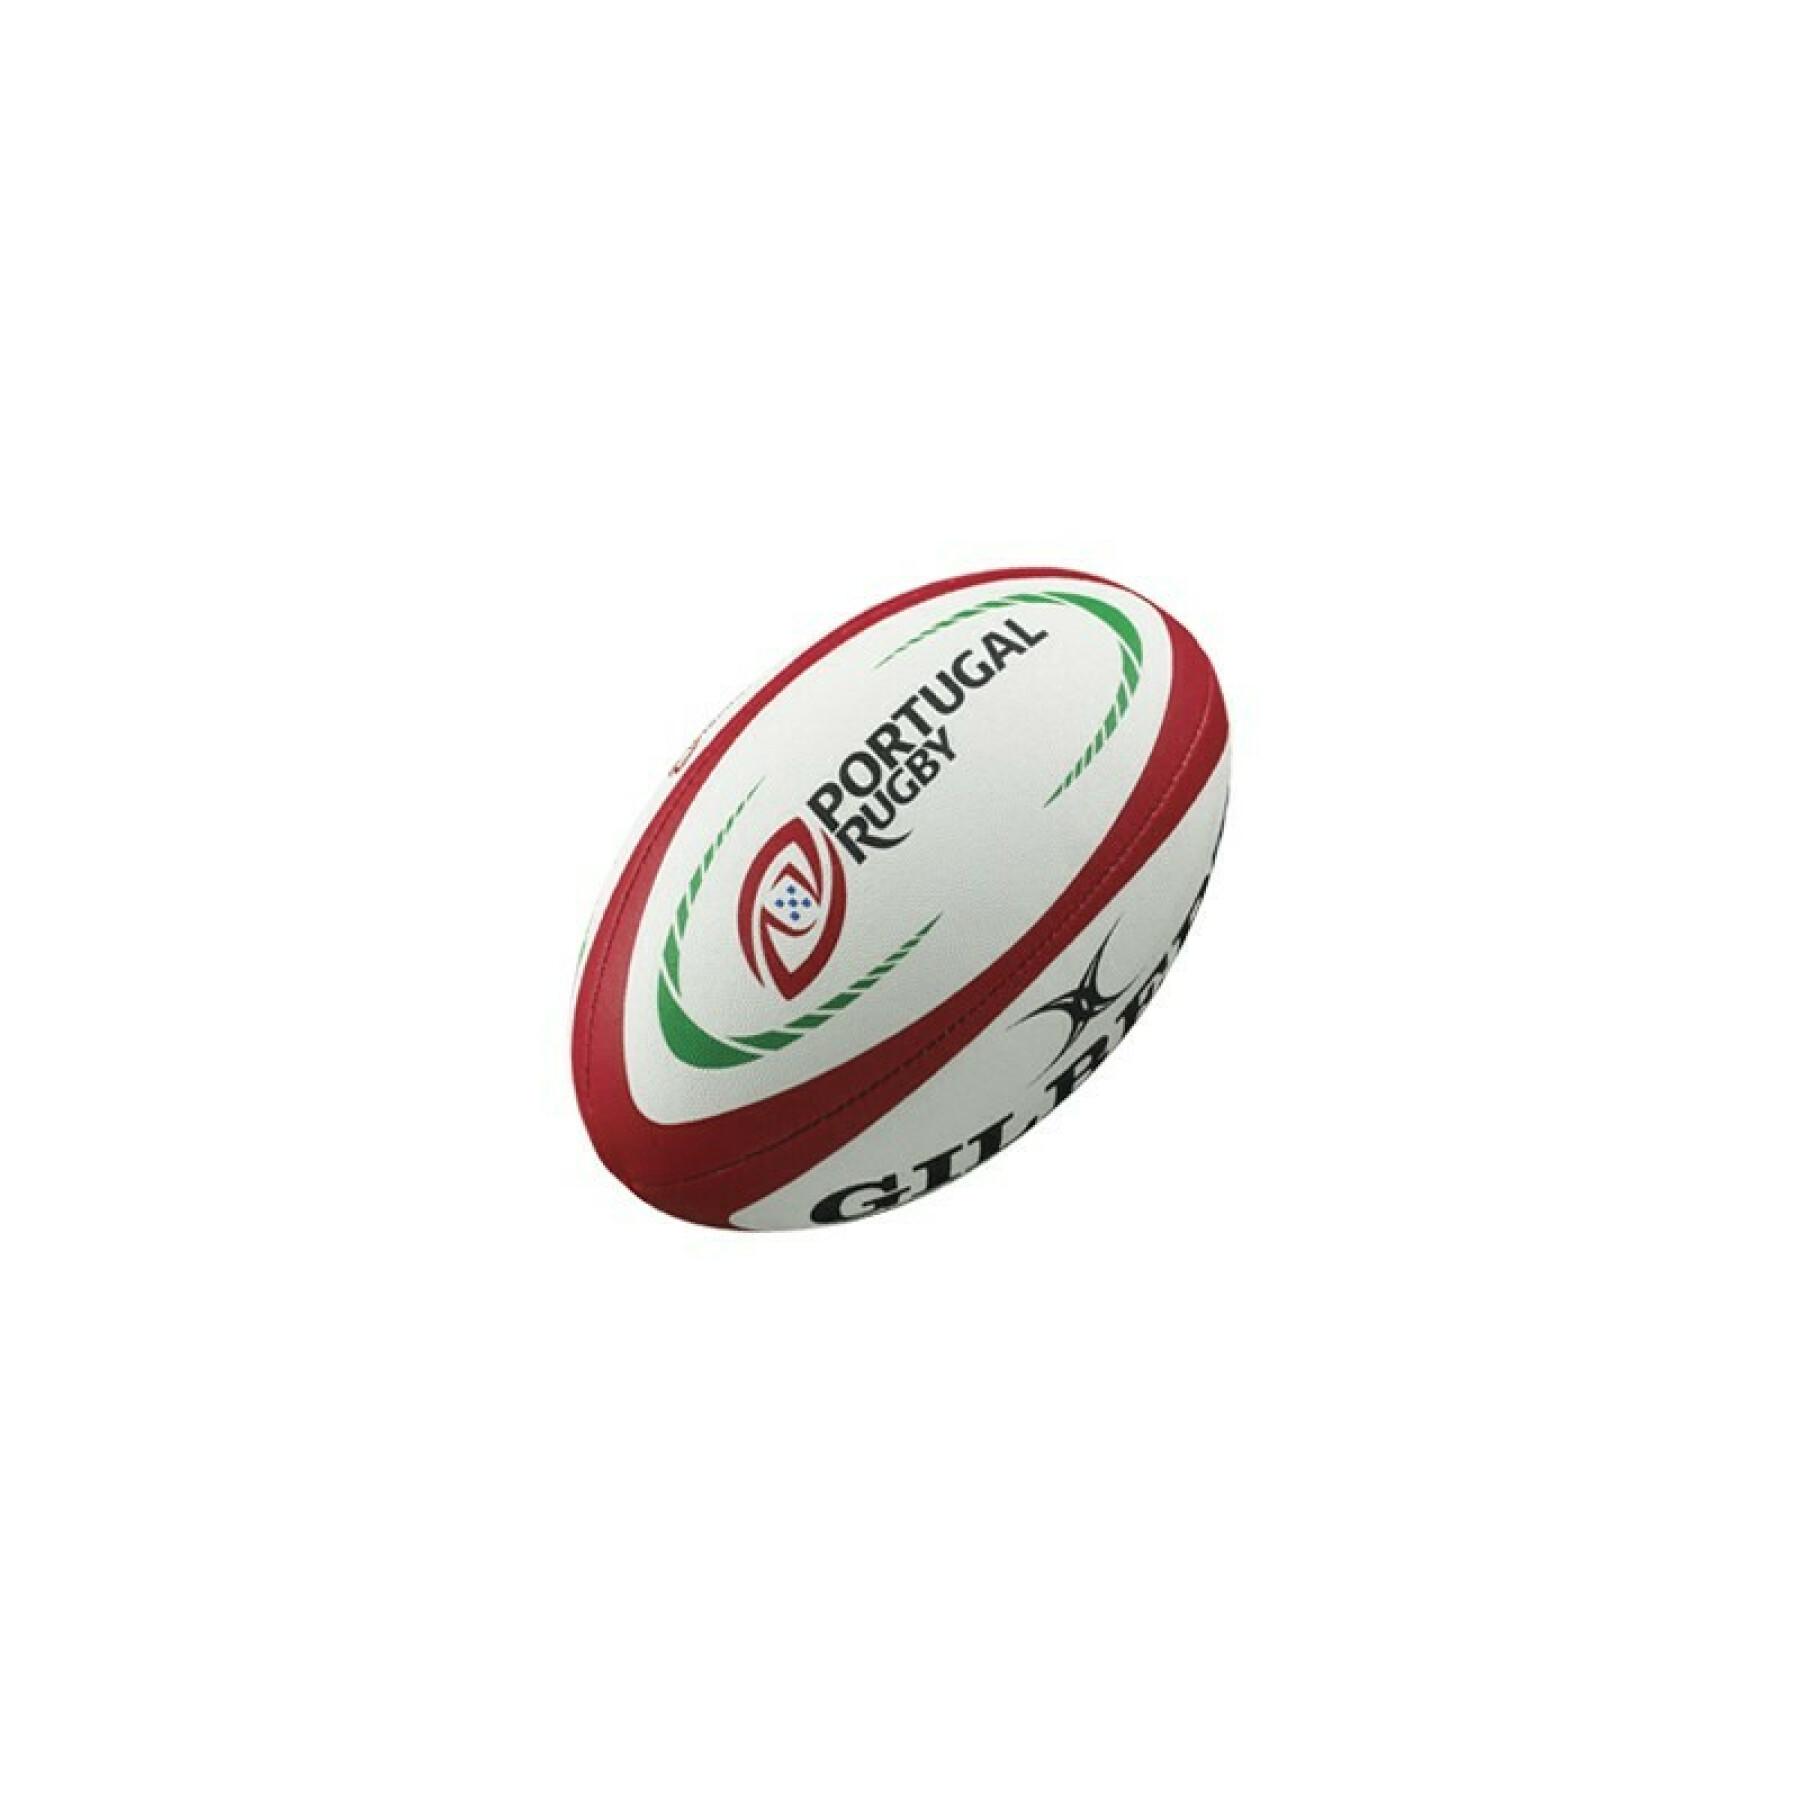 Replika-Rugbyball Portugal 2021/22